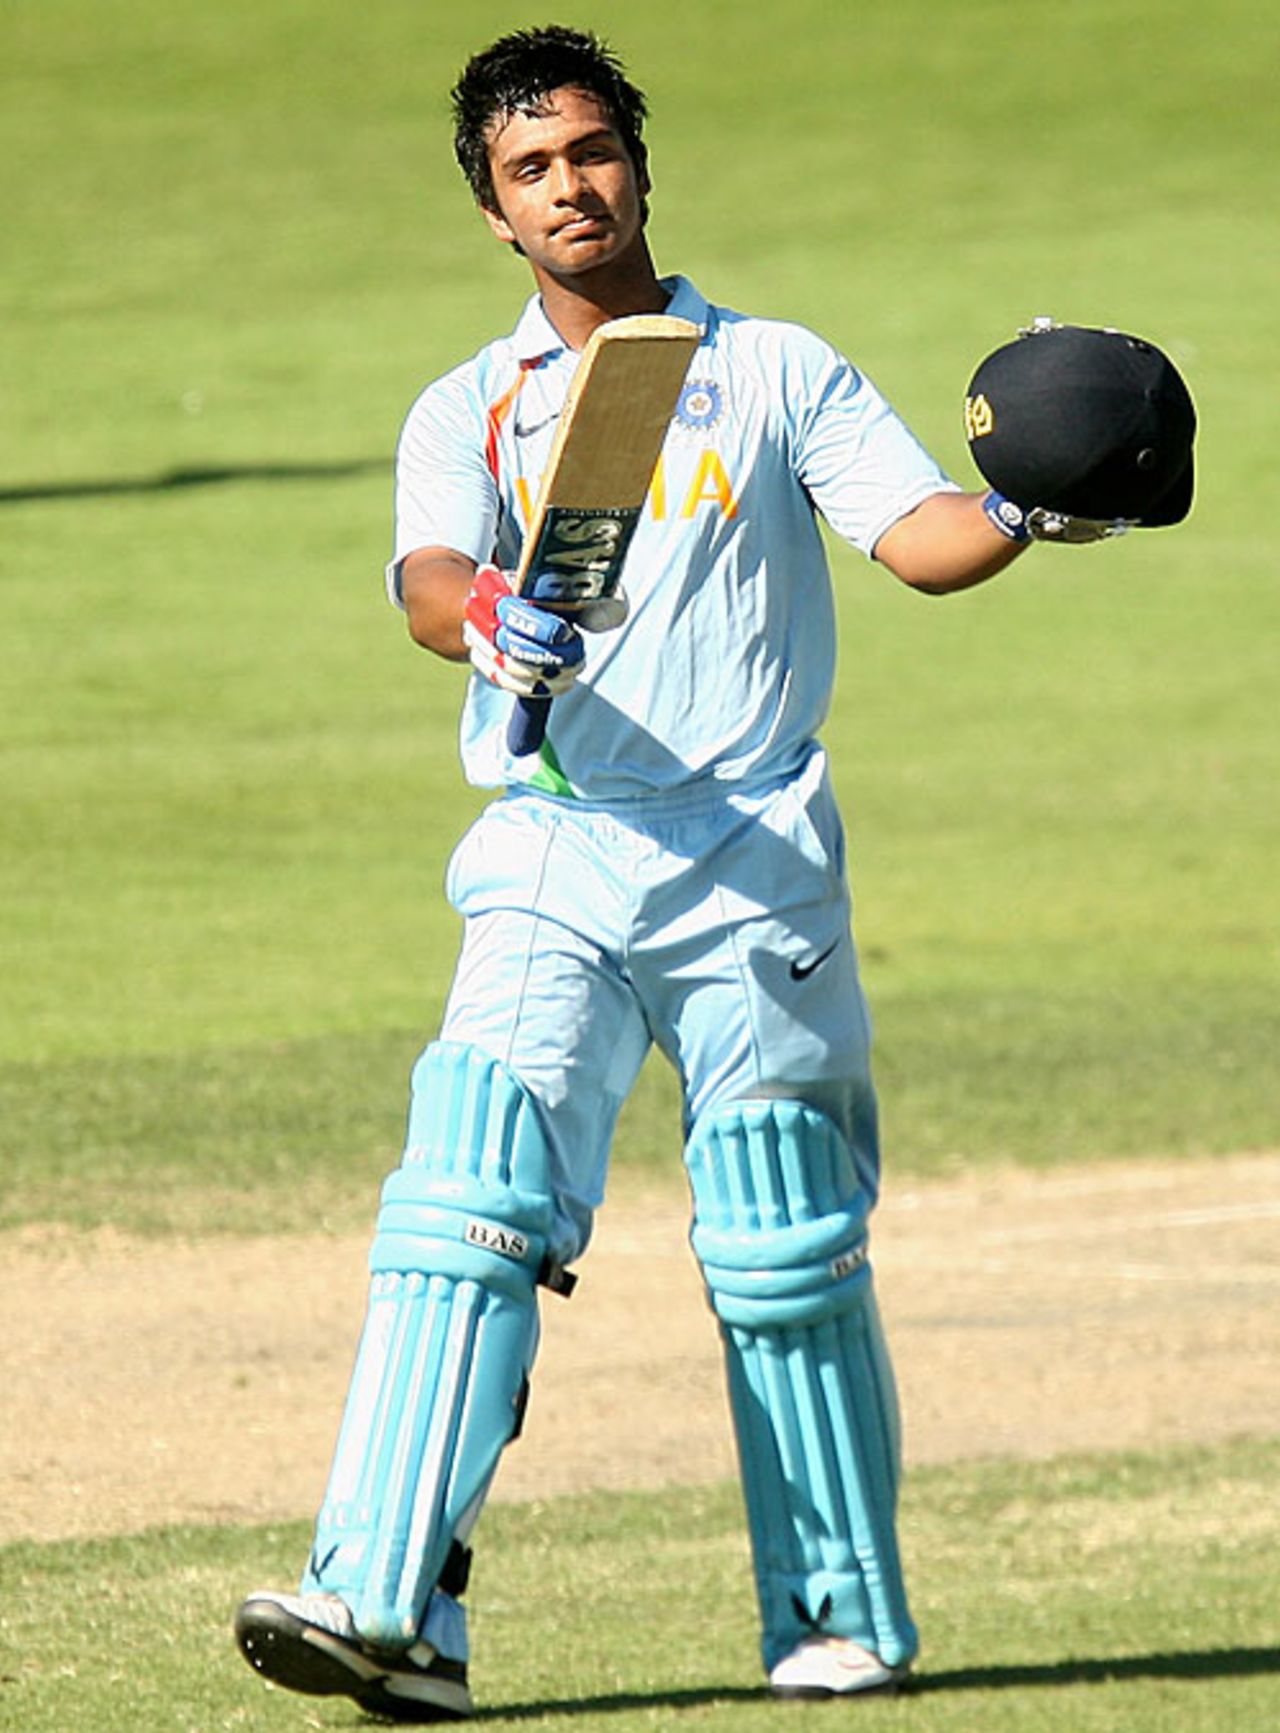 Mandeep Singh celebrates his century, Australia Under-19s v India Under-19s, 2nd match, Hobart, April 9, 2009